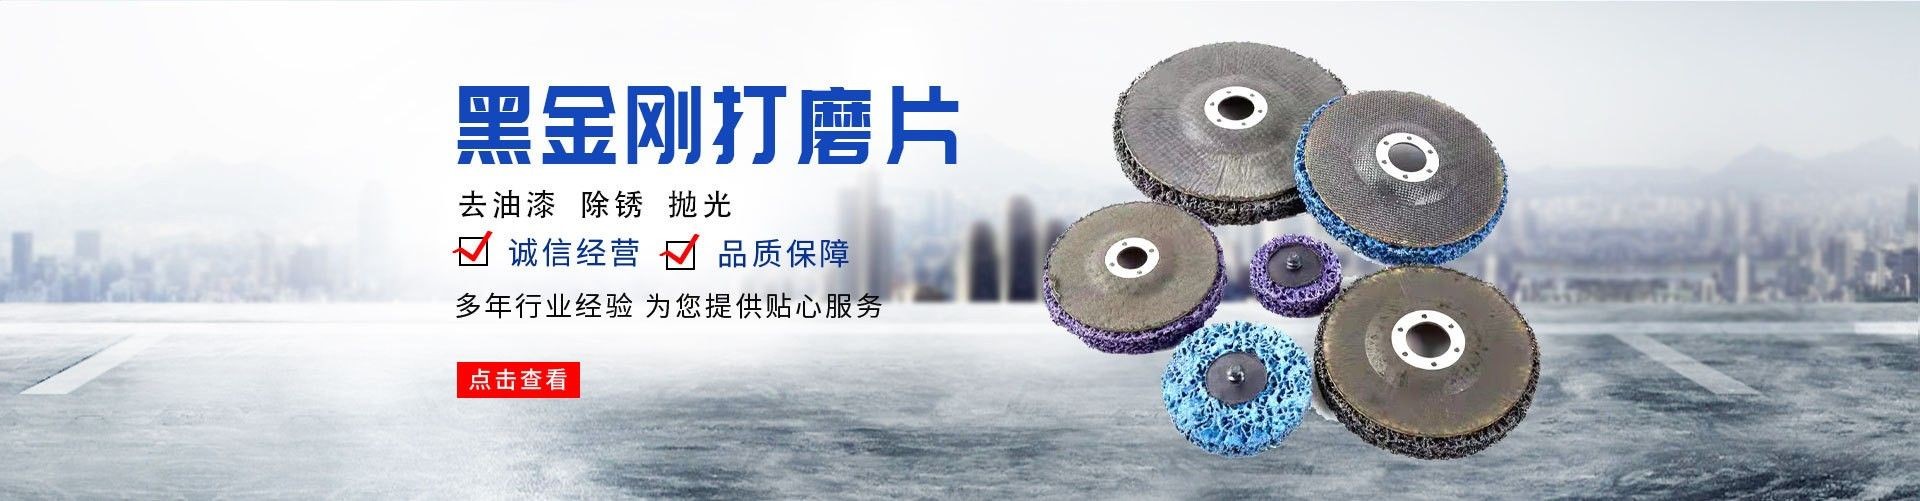 Xingtai Yiwen Abrasives Co. Ltd.